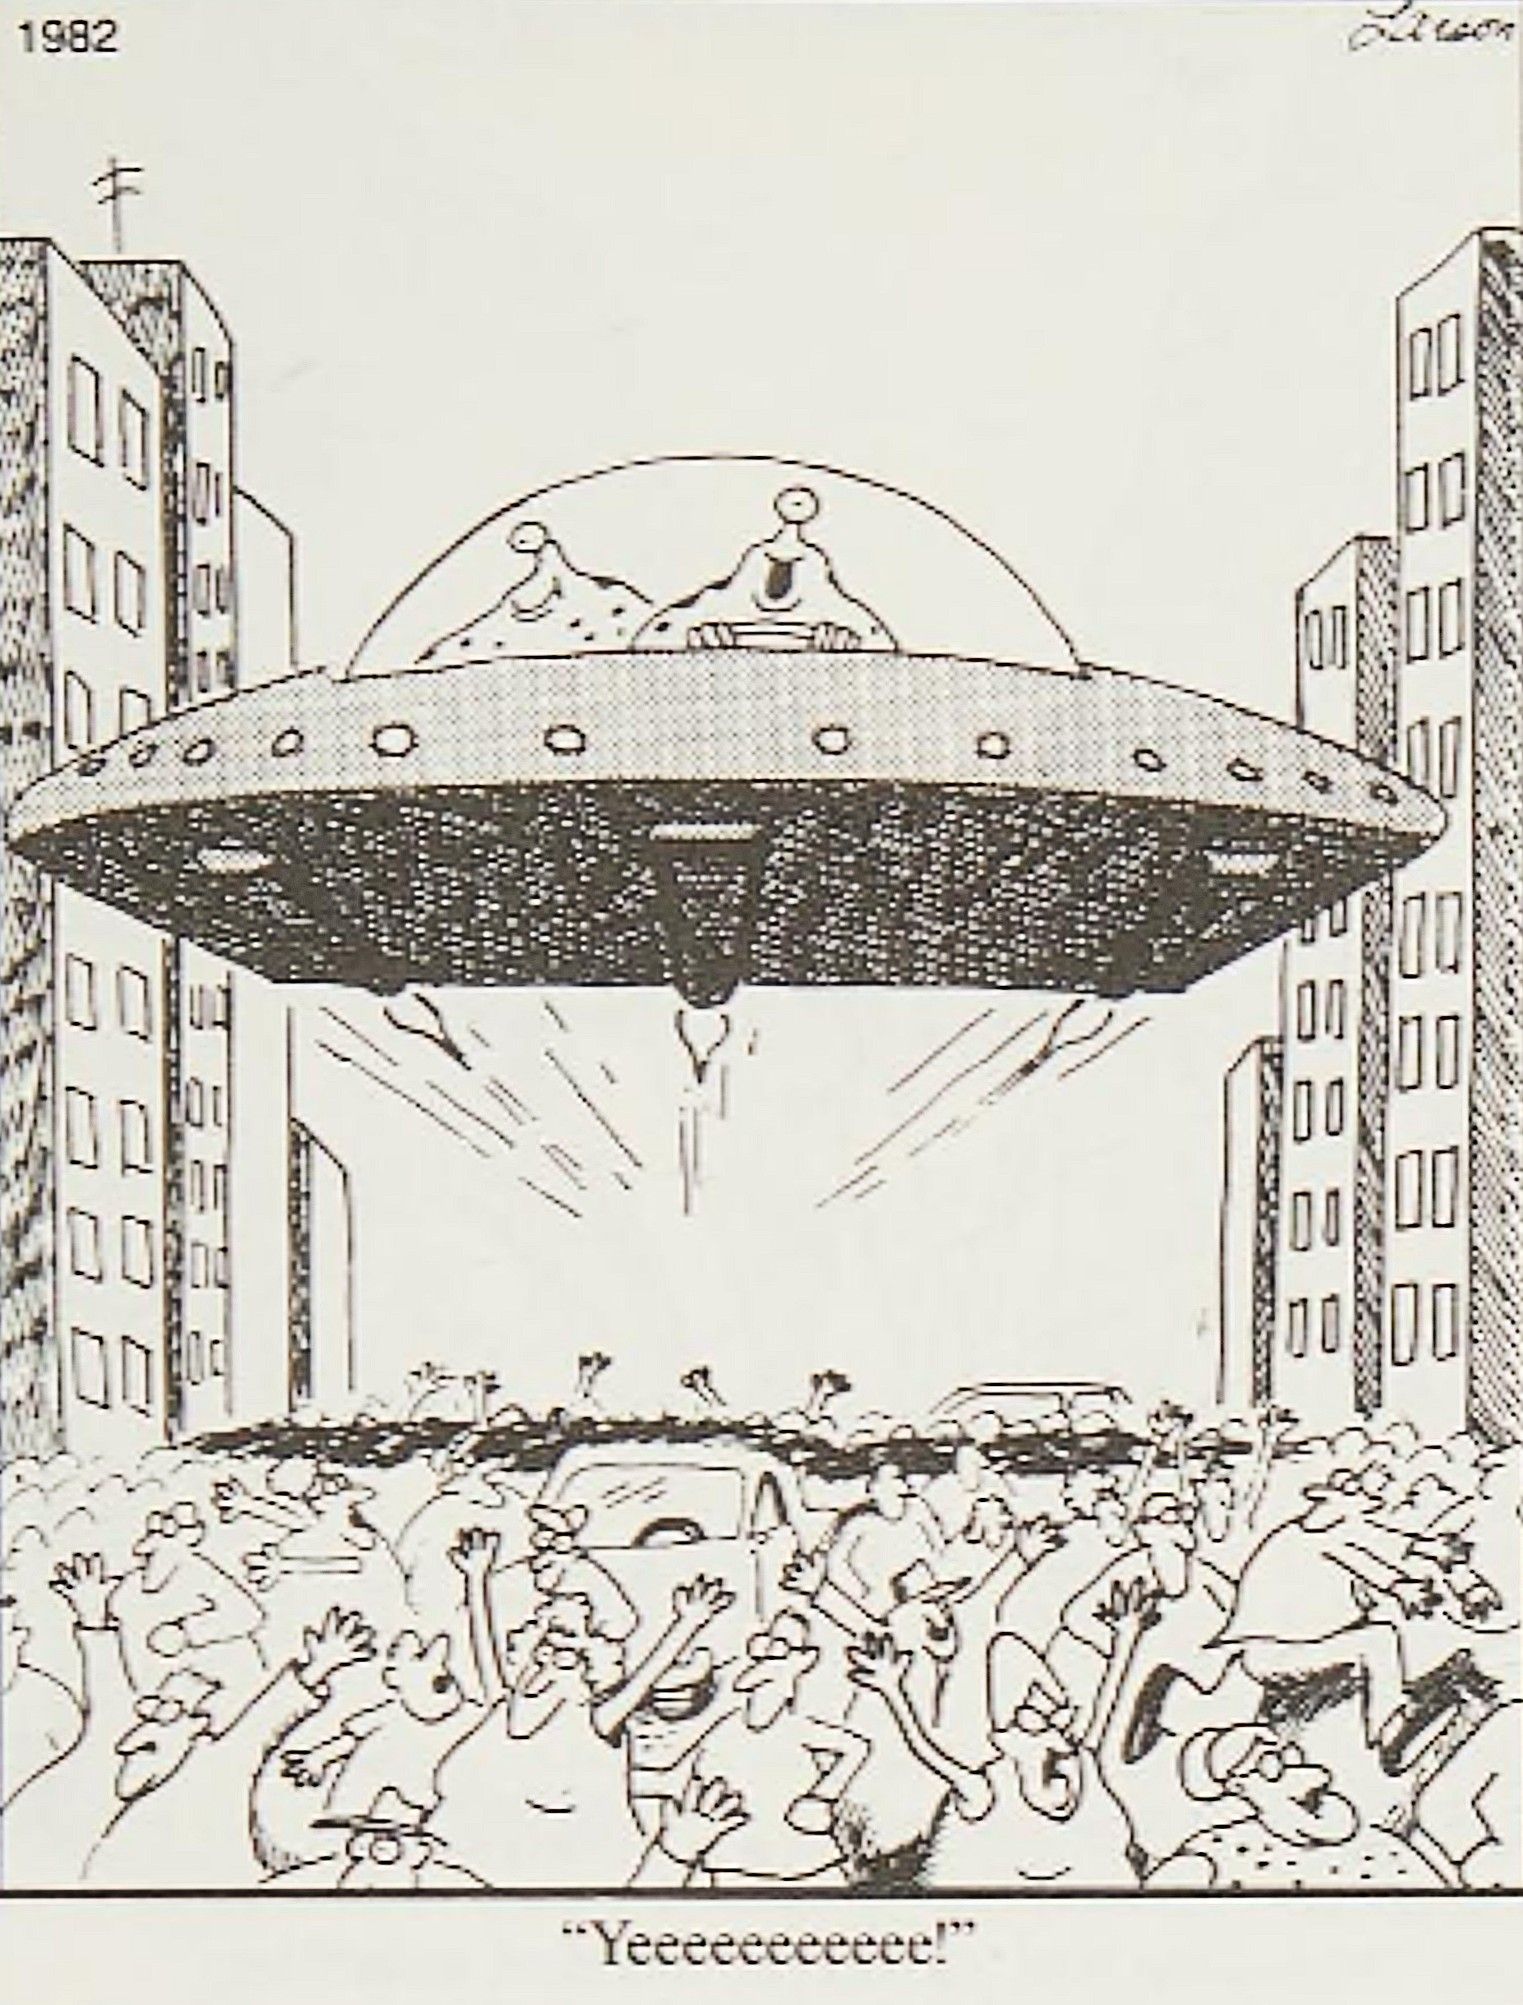 Original misprinted version of Far Side comic featuring alien spaceship zooming over top of fleeing humans